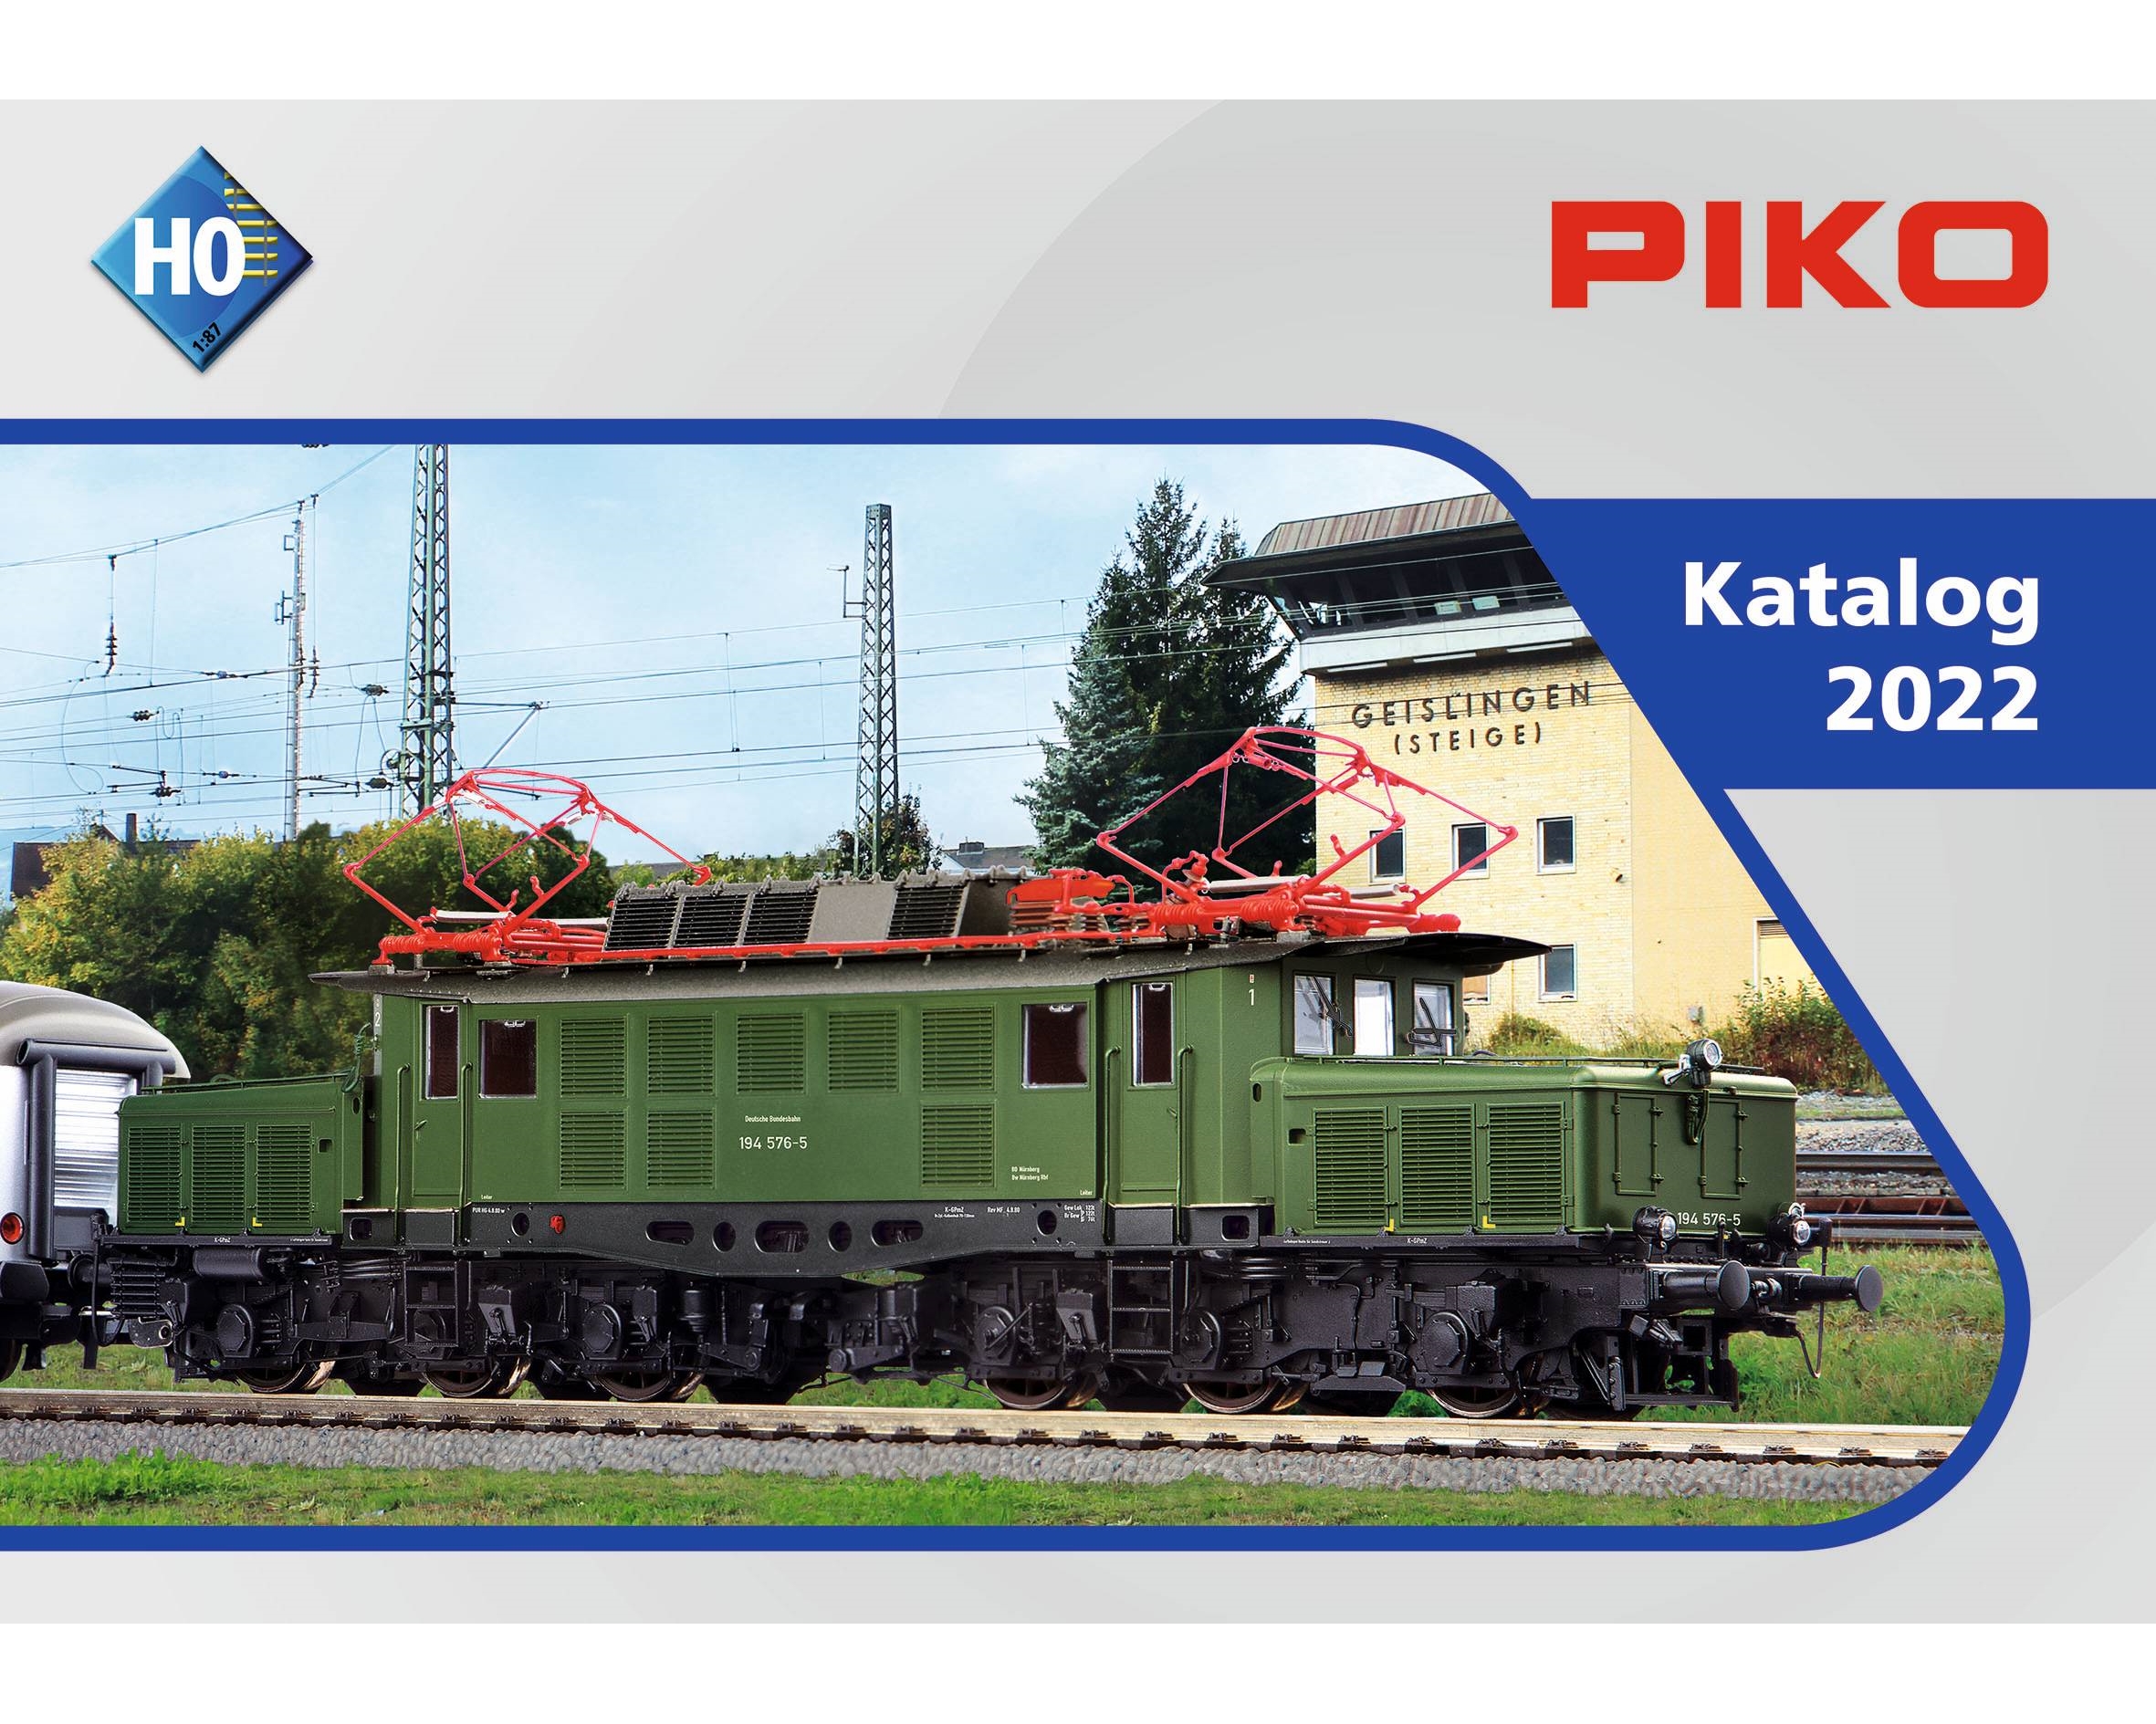 Piko 99502 - H0-CATALOGUS 2022 (DUITS)